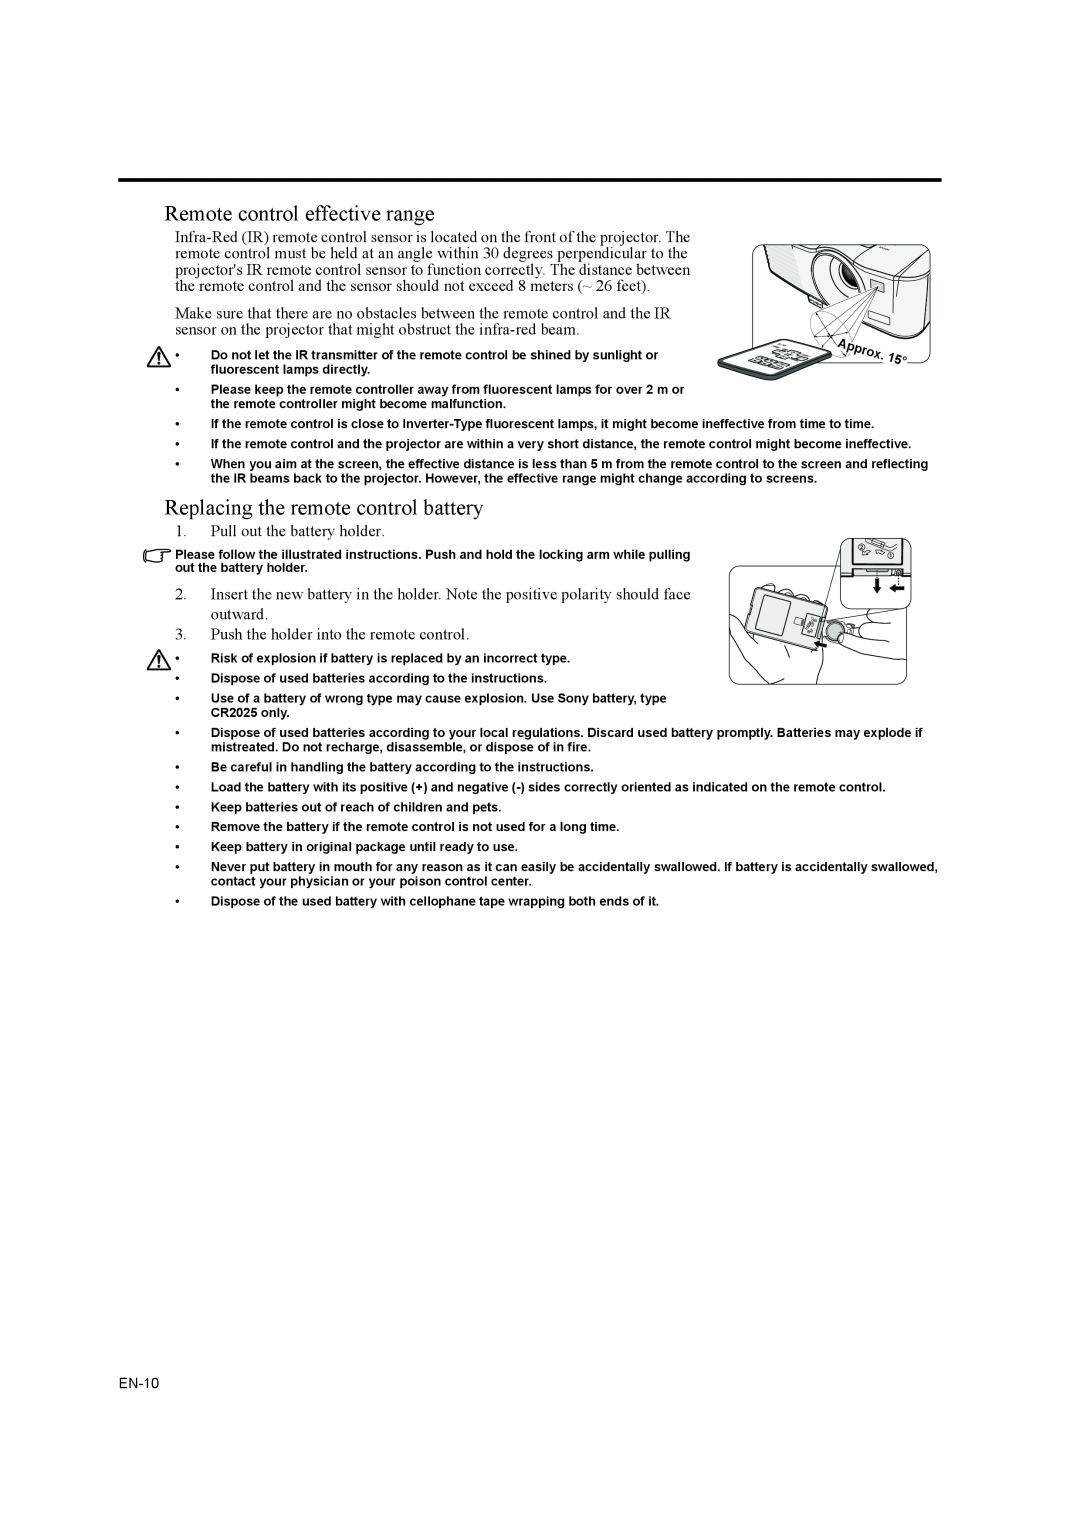 Mitsubishi Electronics EW270U user manual Remote control effective range, Replacing the remote control battery 